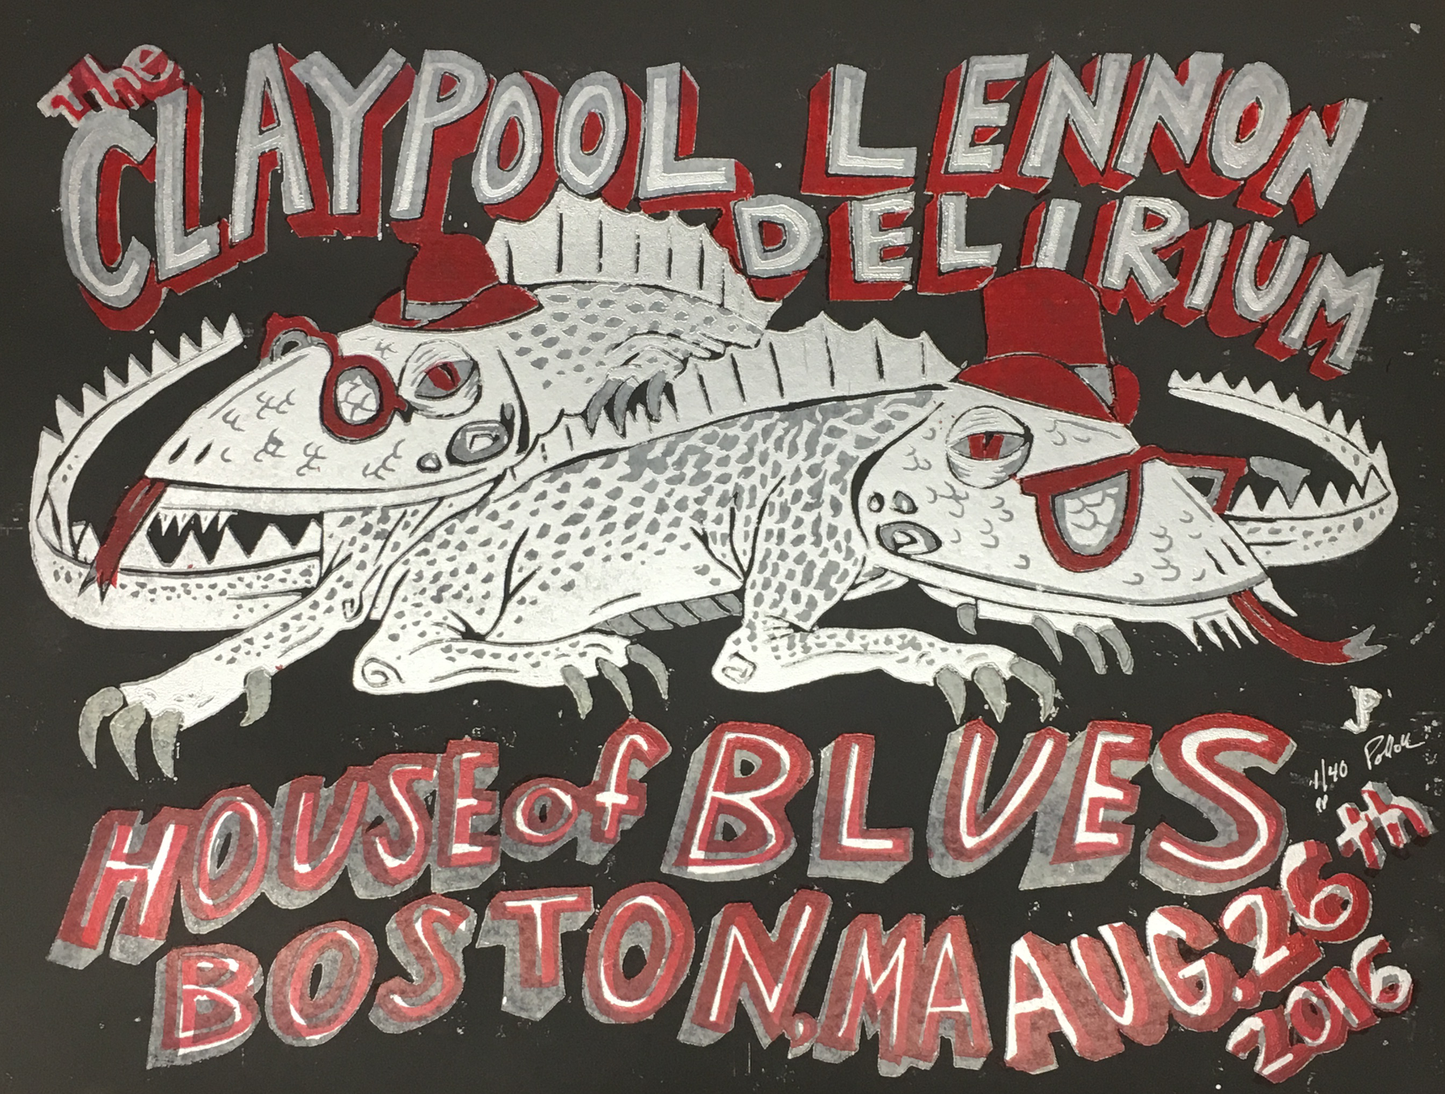 Jim Pollock "Claypool Lennon Delirium - House of Blues"